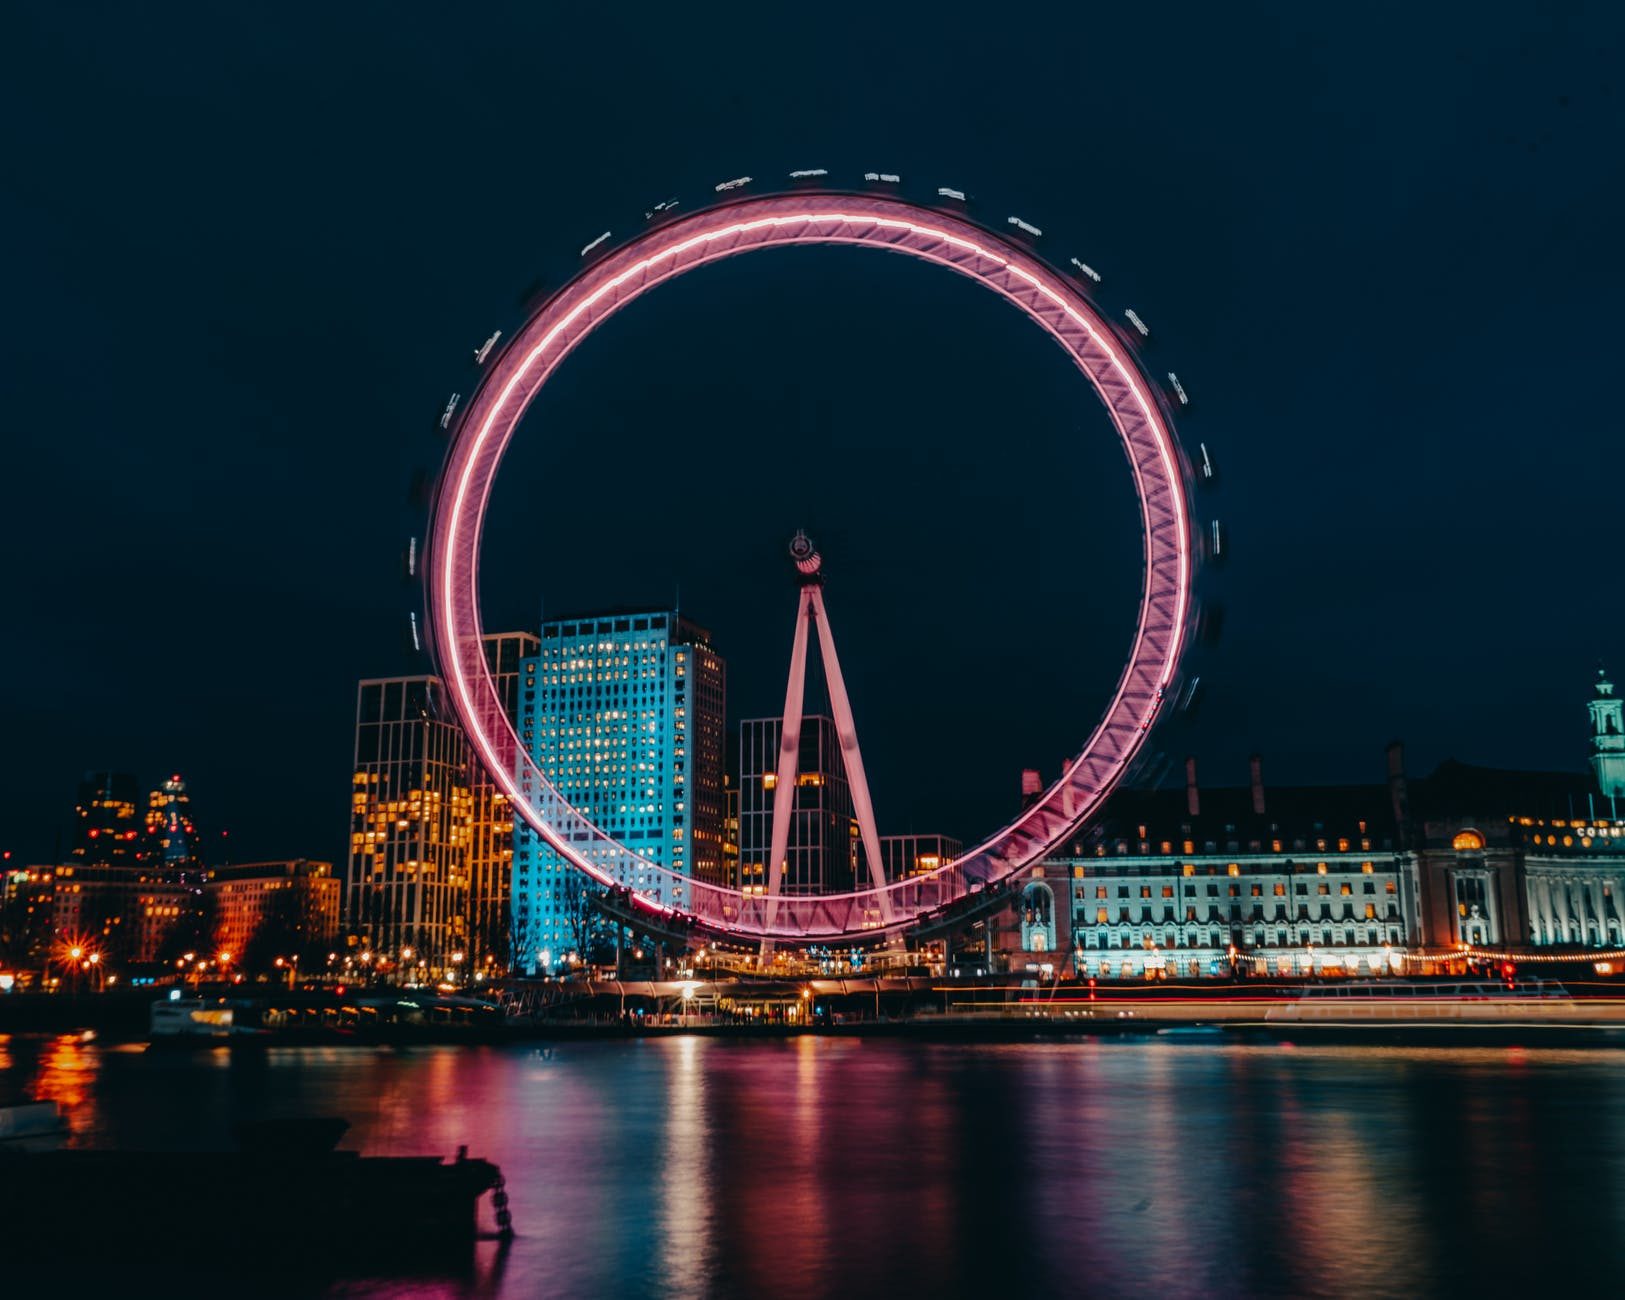 luminous ferris wheel in modern city district on river bank at night